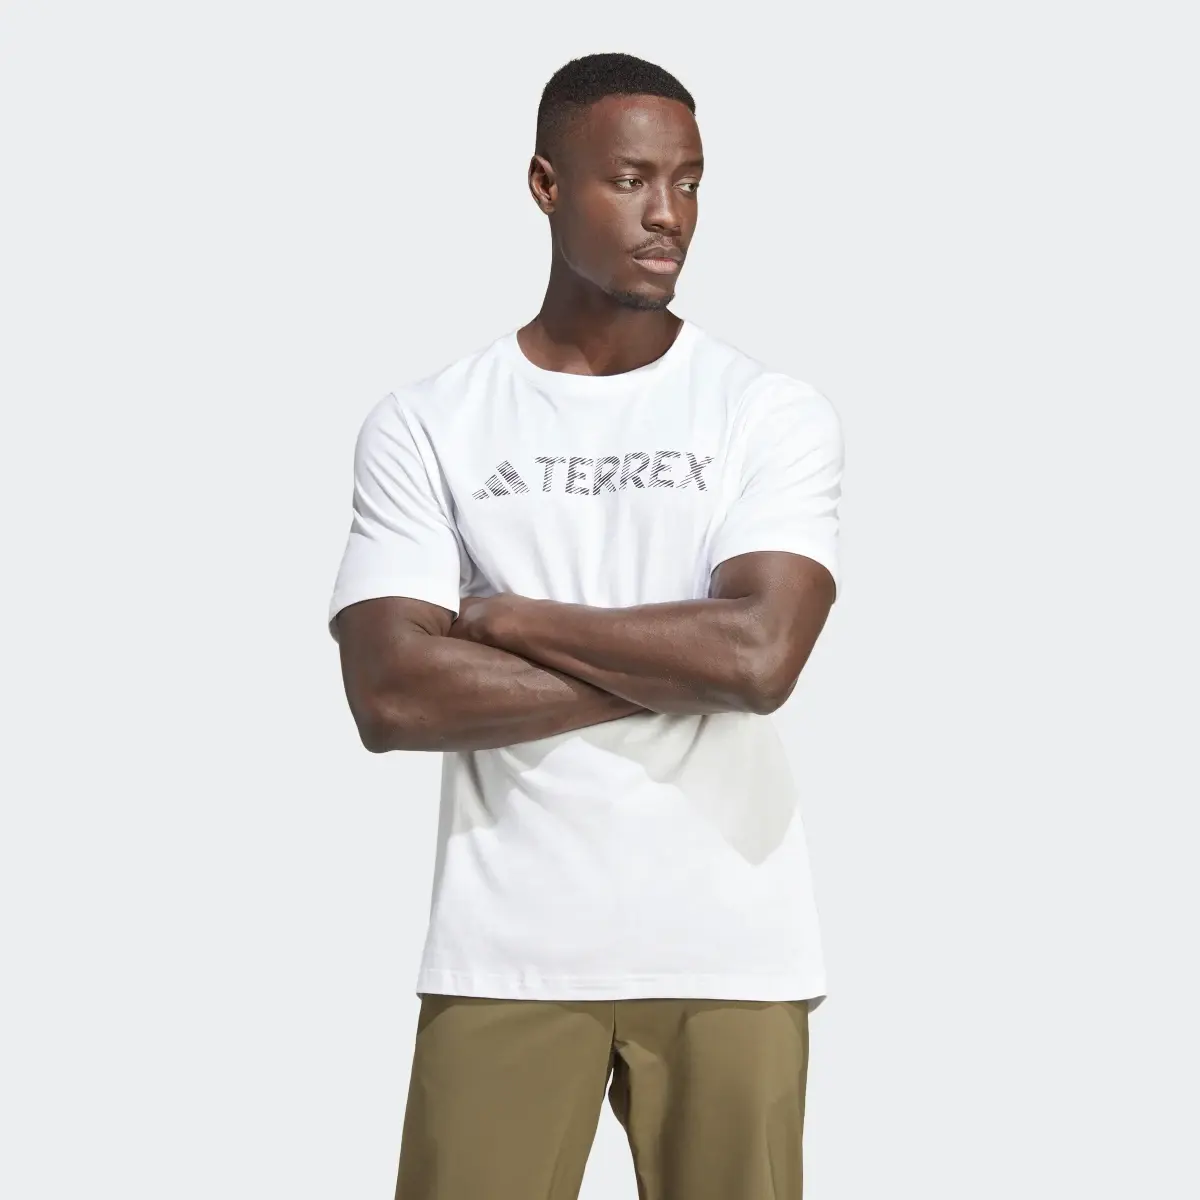 Adidas T-shirt Terrex Classic Logo. 2